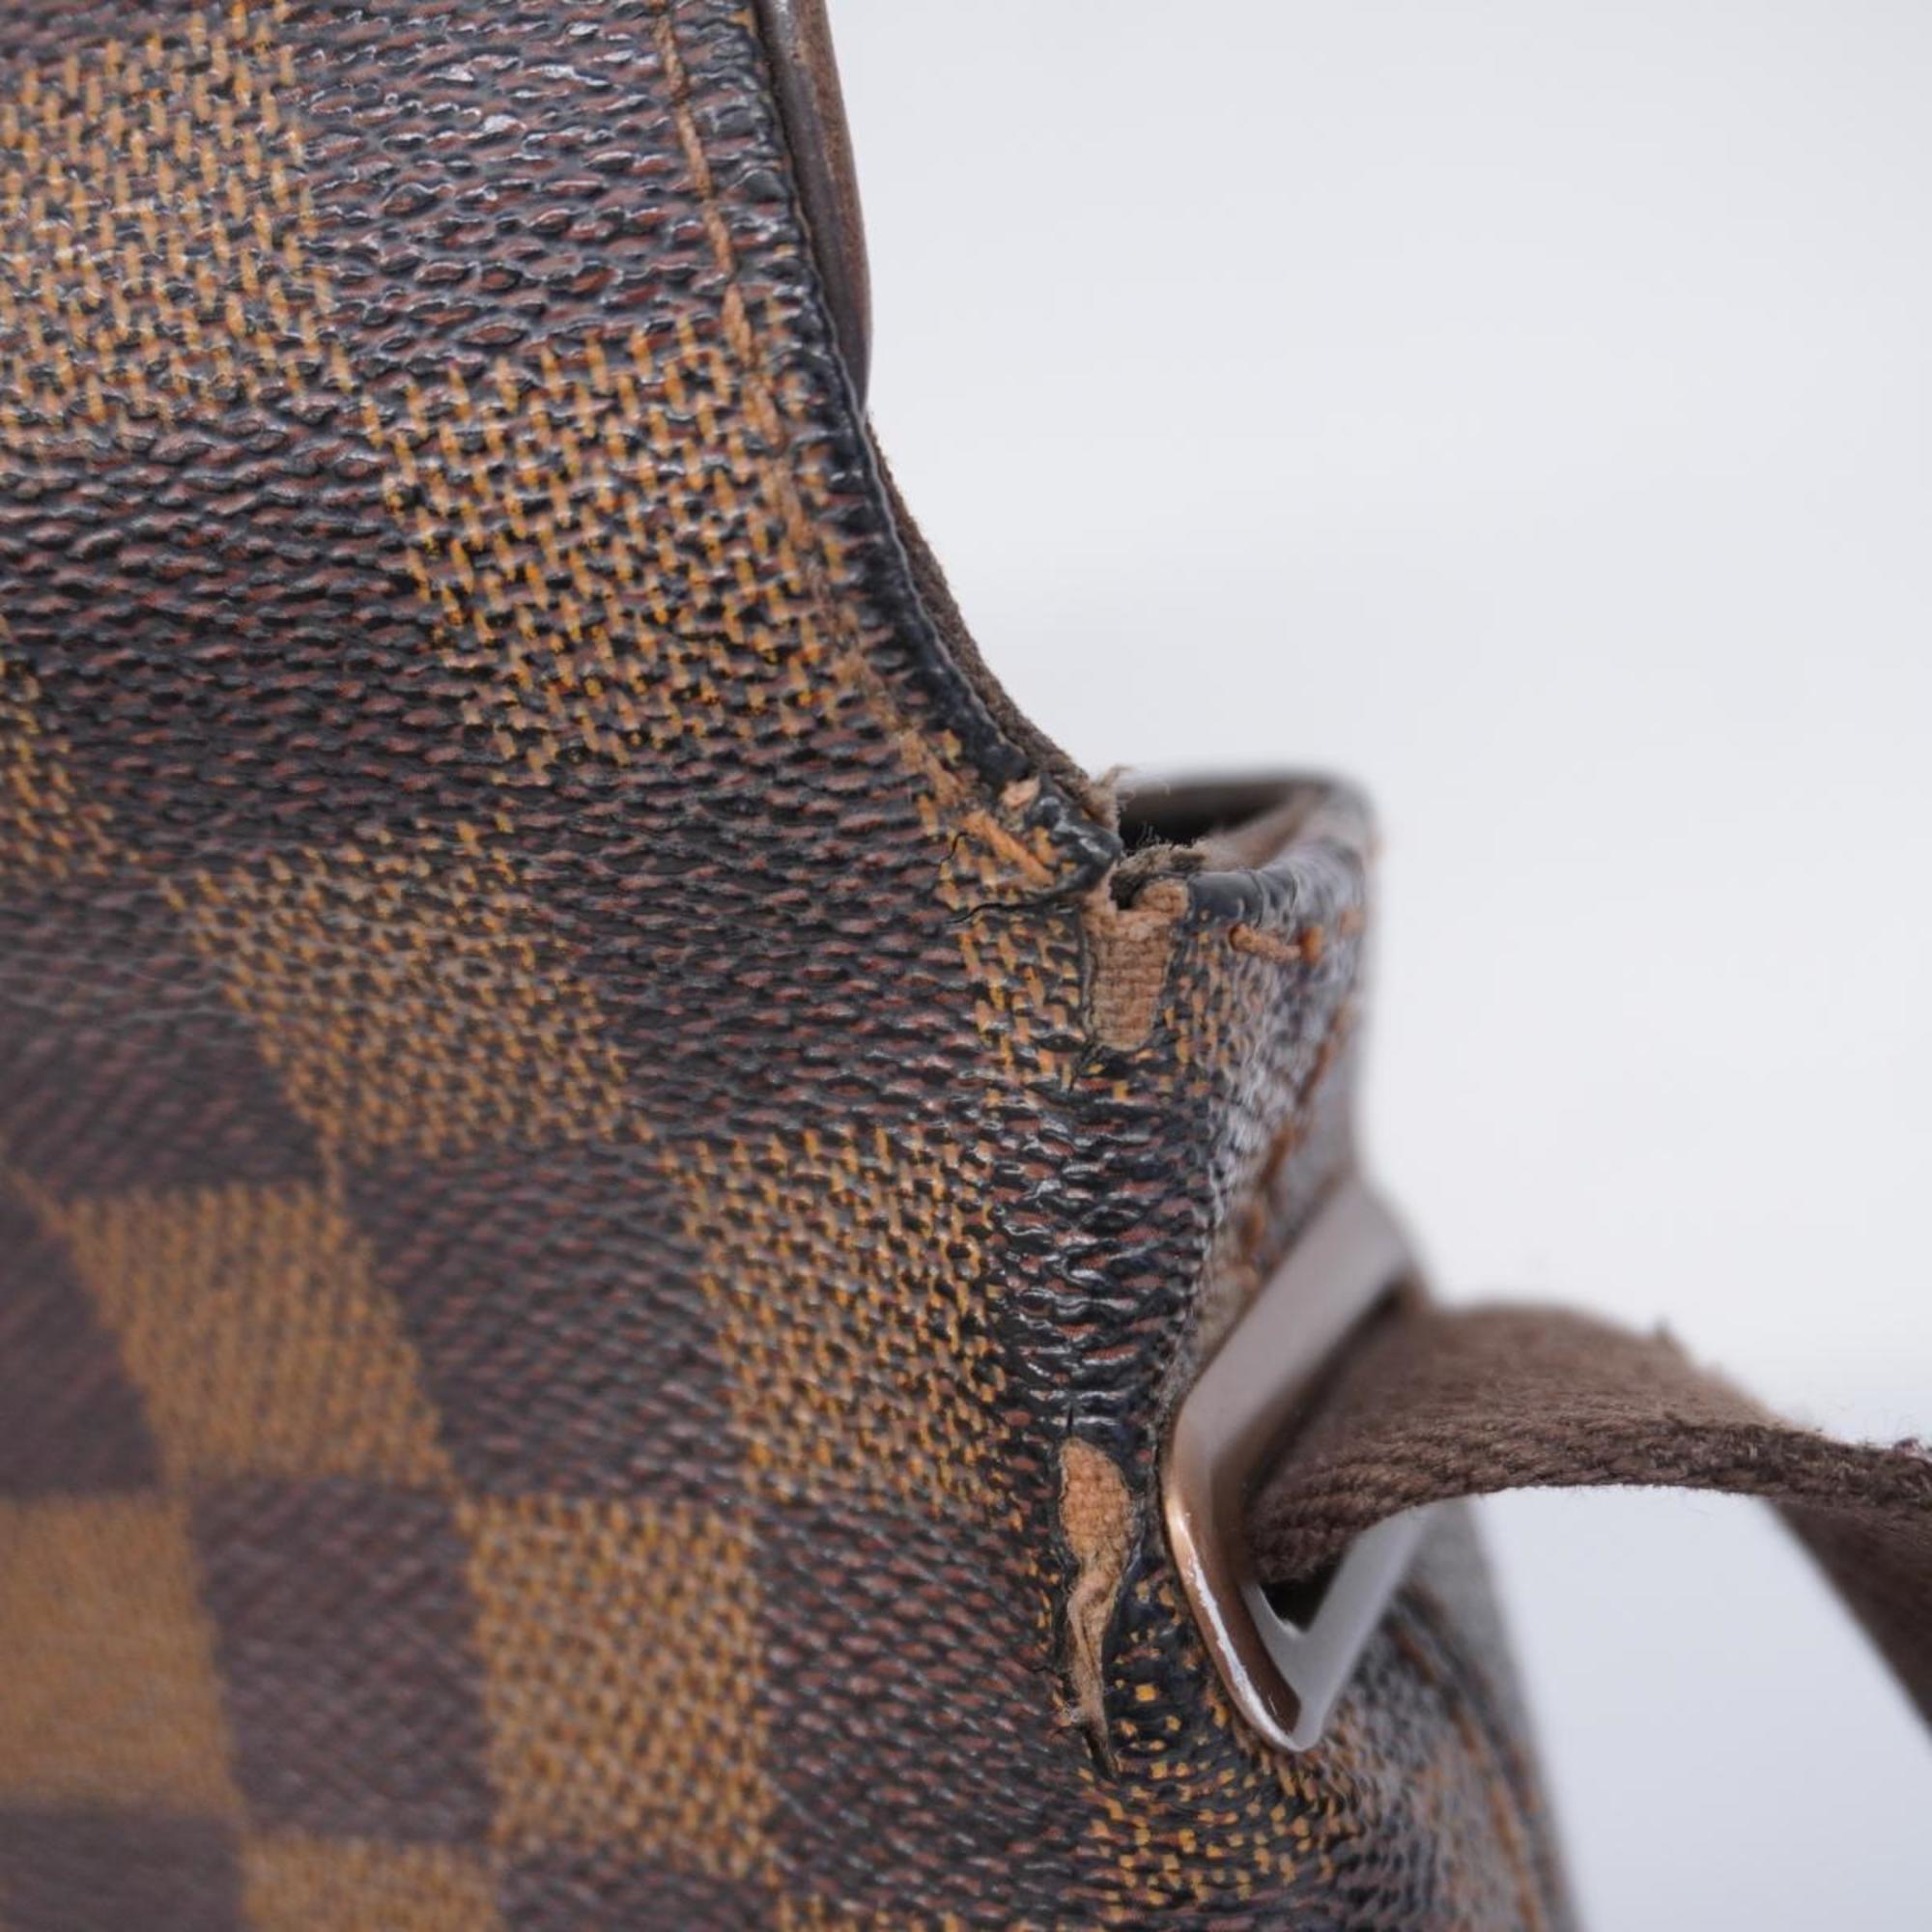 Louis Vuitton Shoulder Bag Monogram Brooklyn PM N51210 Ebene Men's